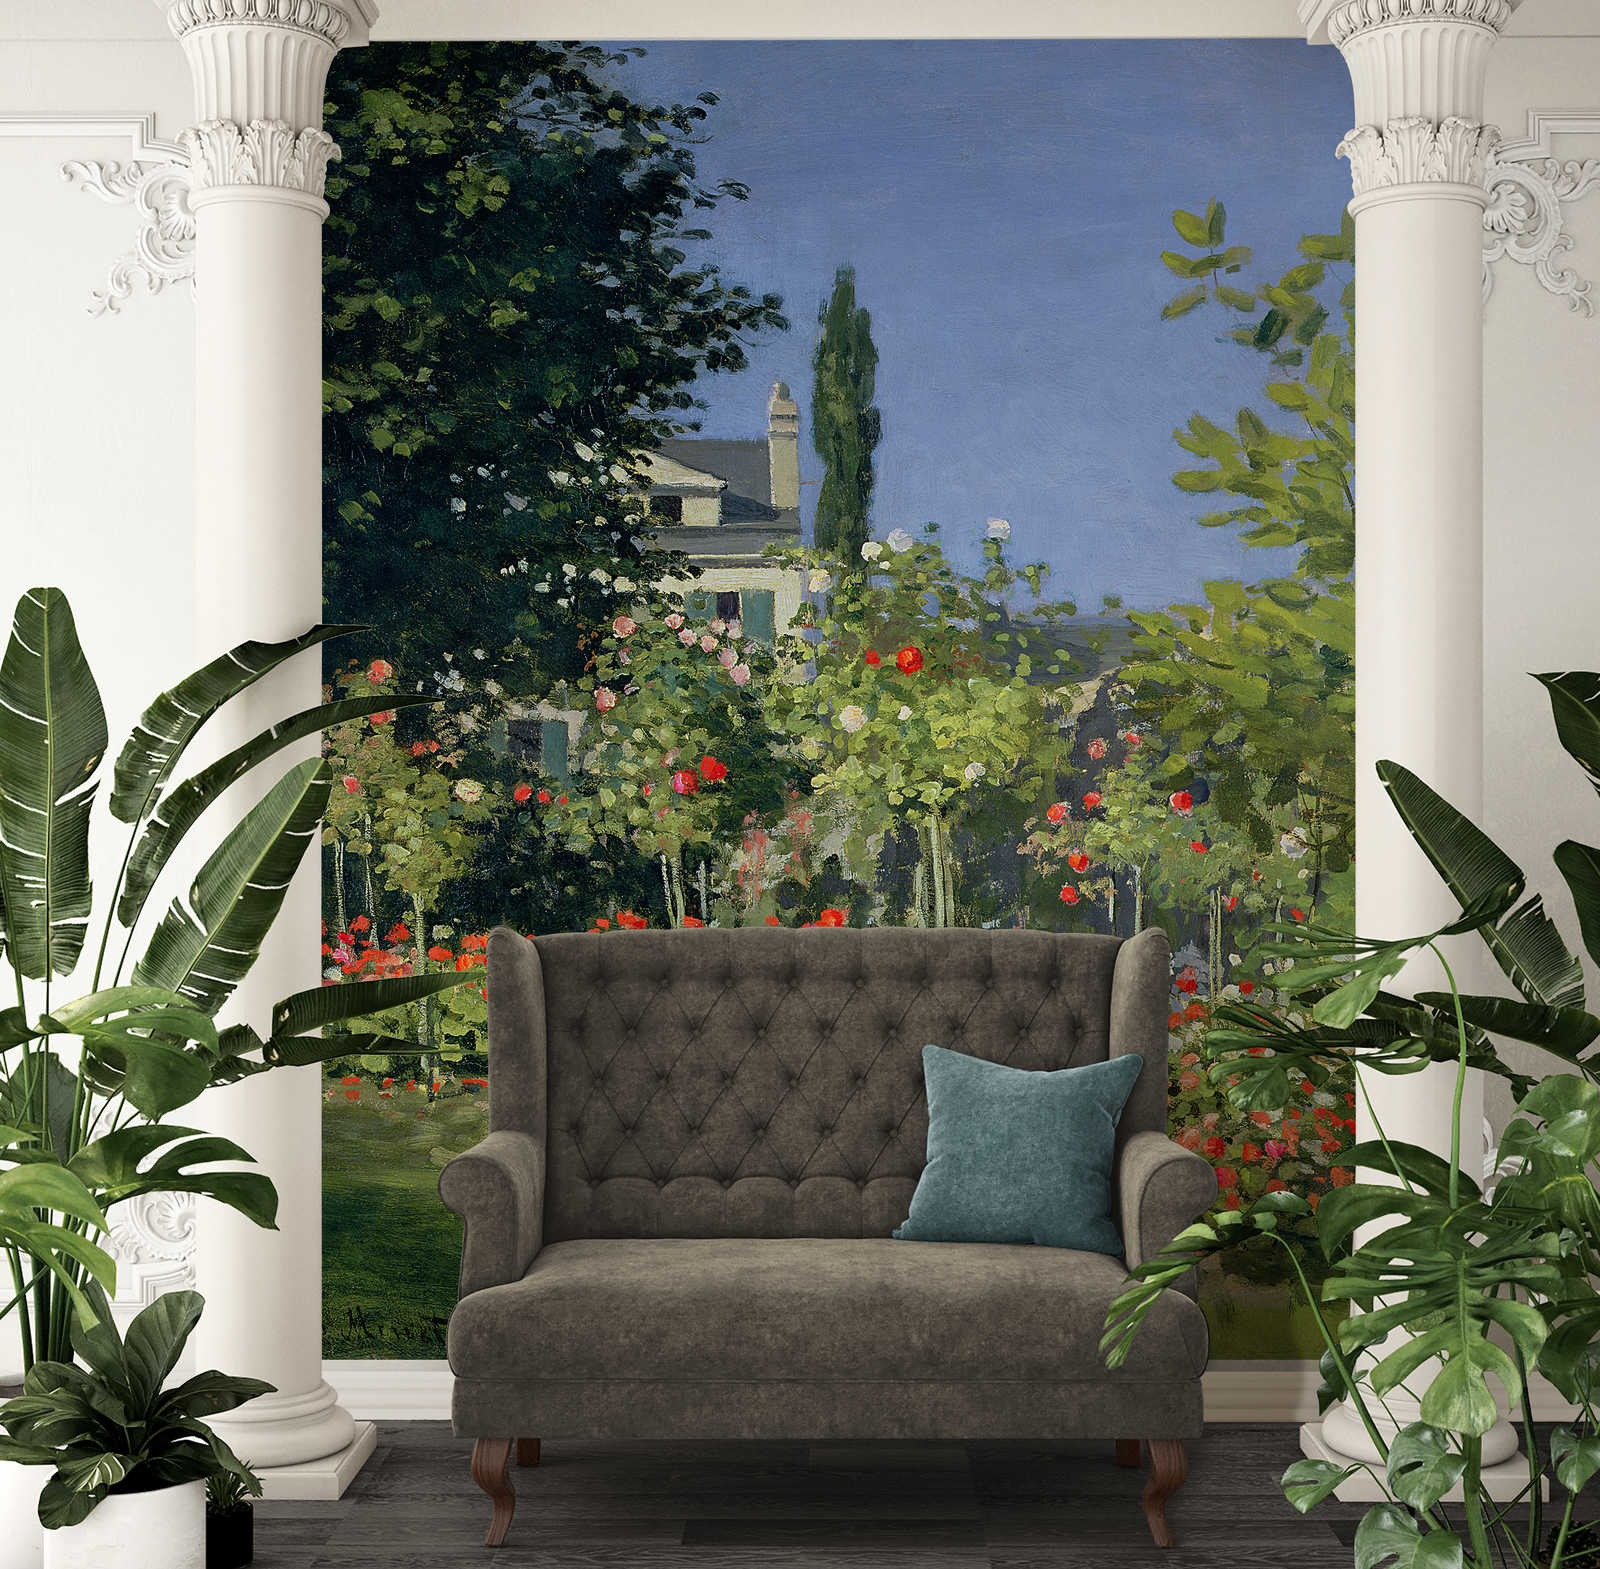             Photo wallpaper "Flowering garden in SainteAdresse" by Claude Monet
        